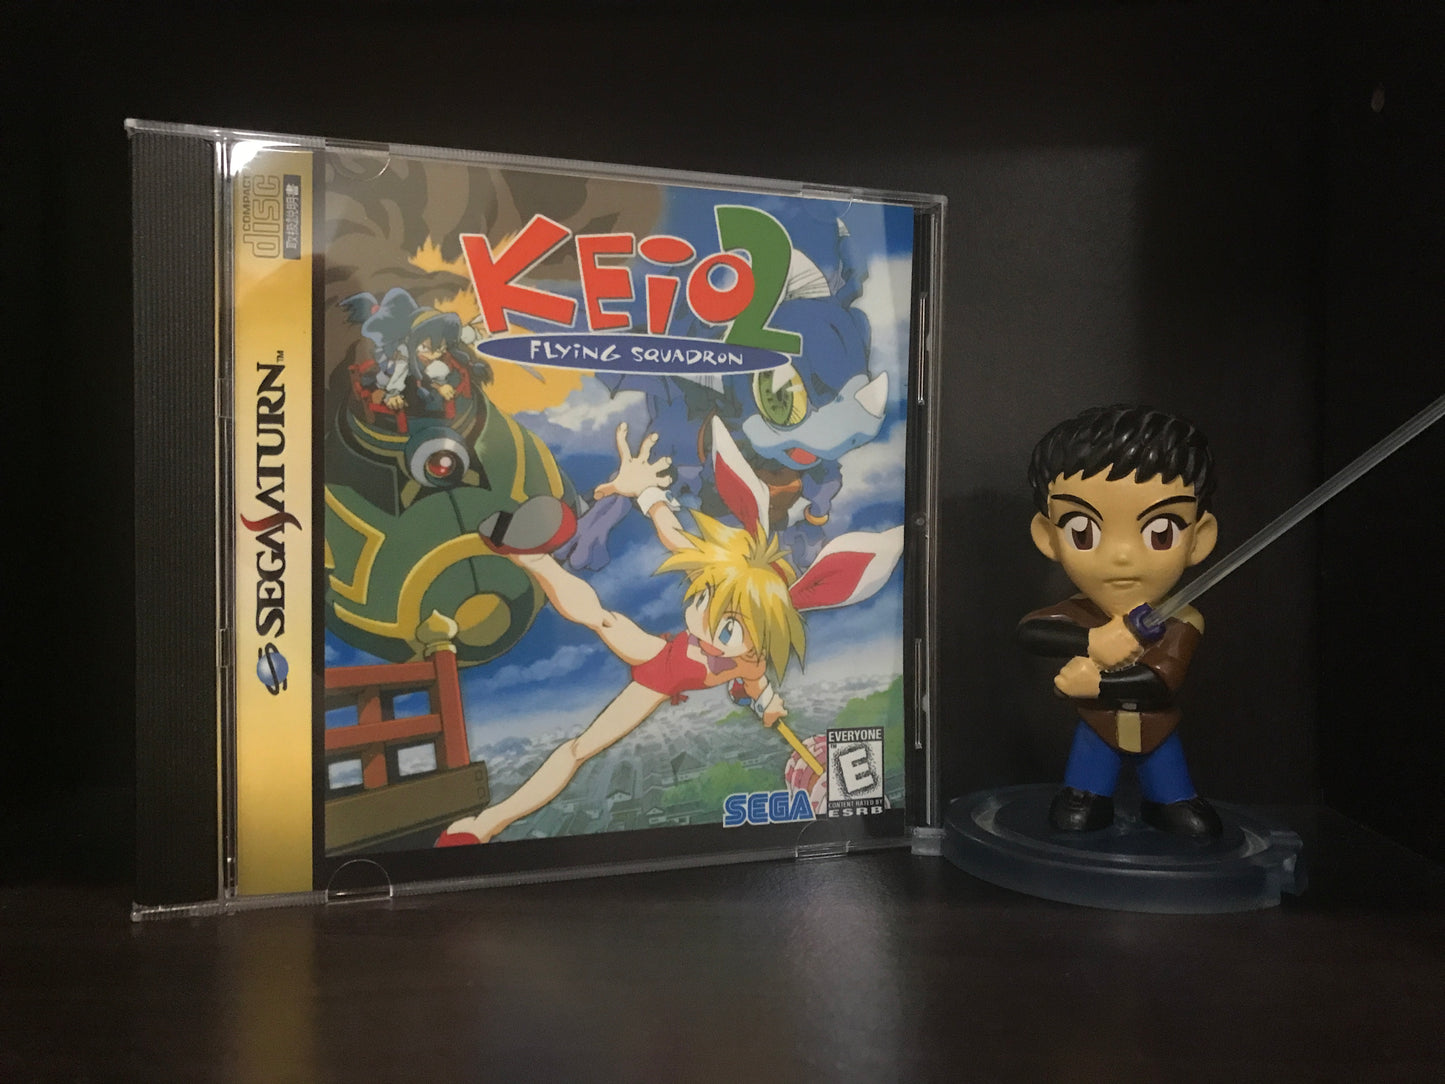 Keio Flying Squadron 2 [Sega Saturn] Reproduction